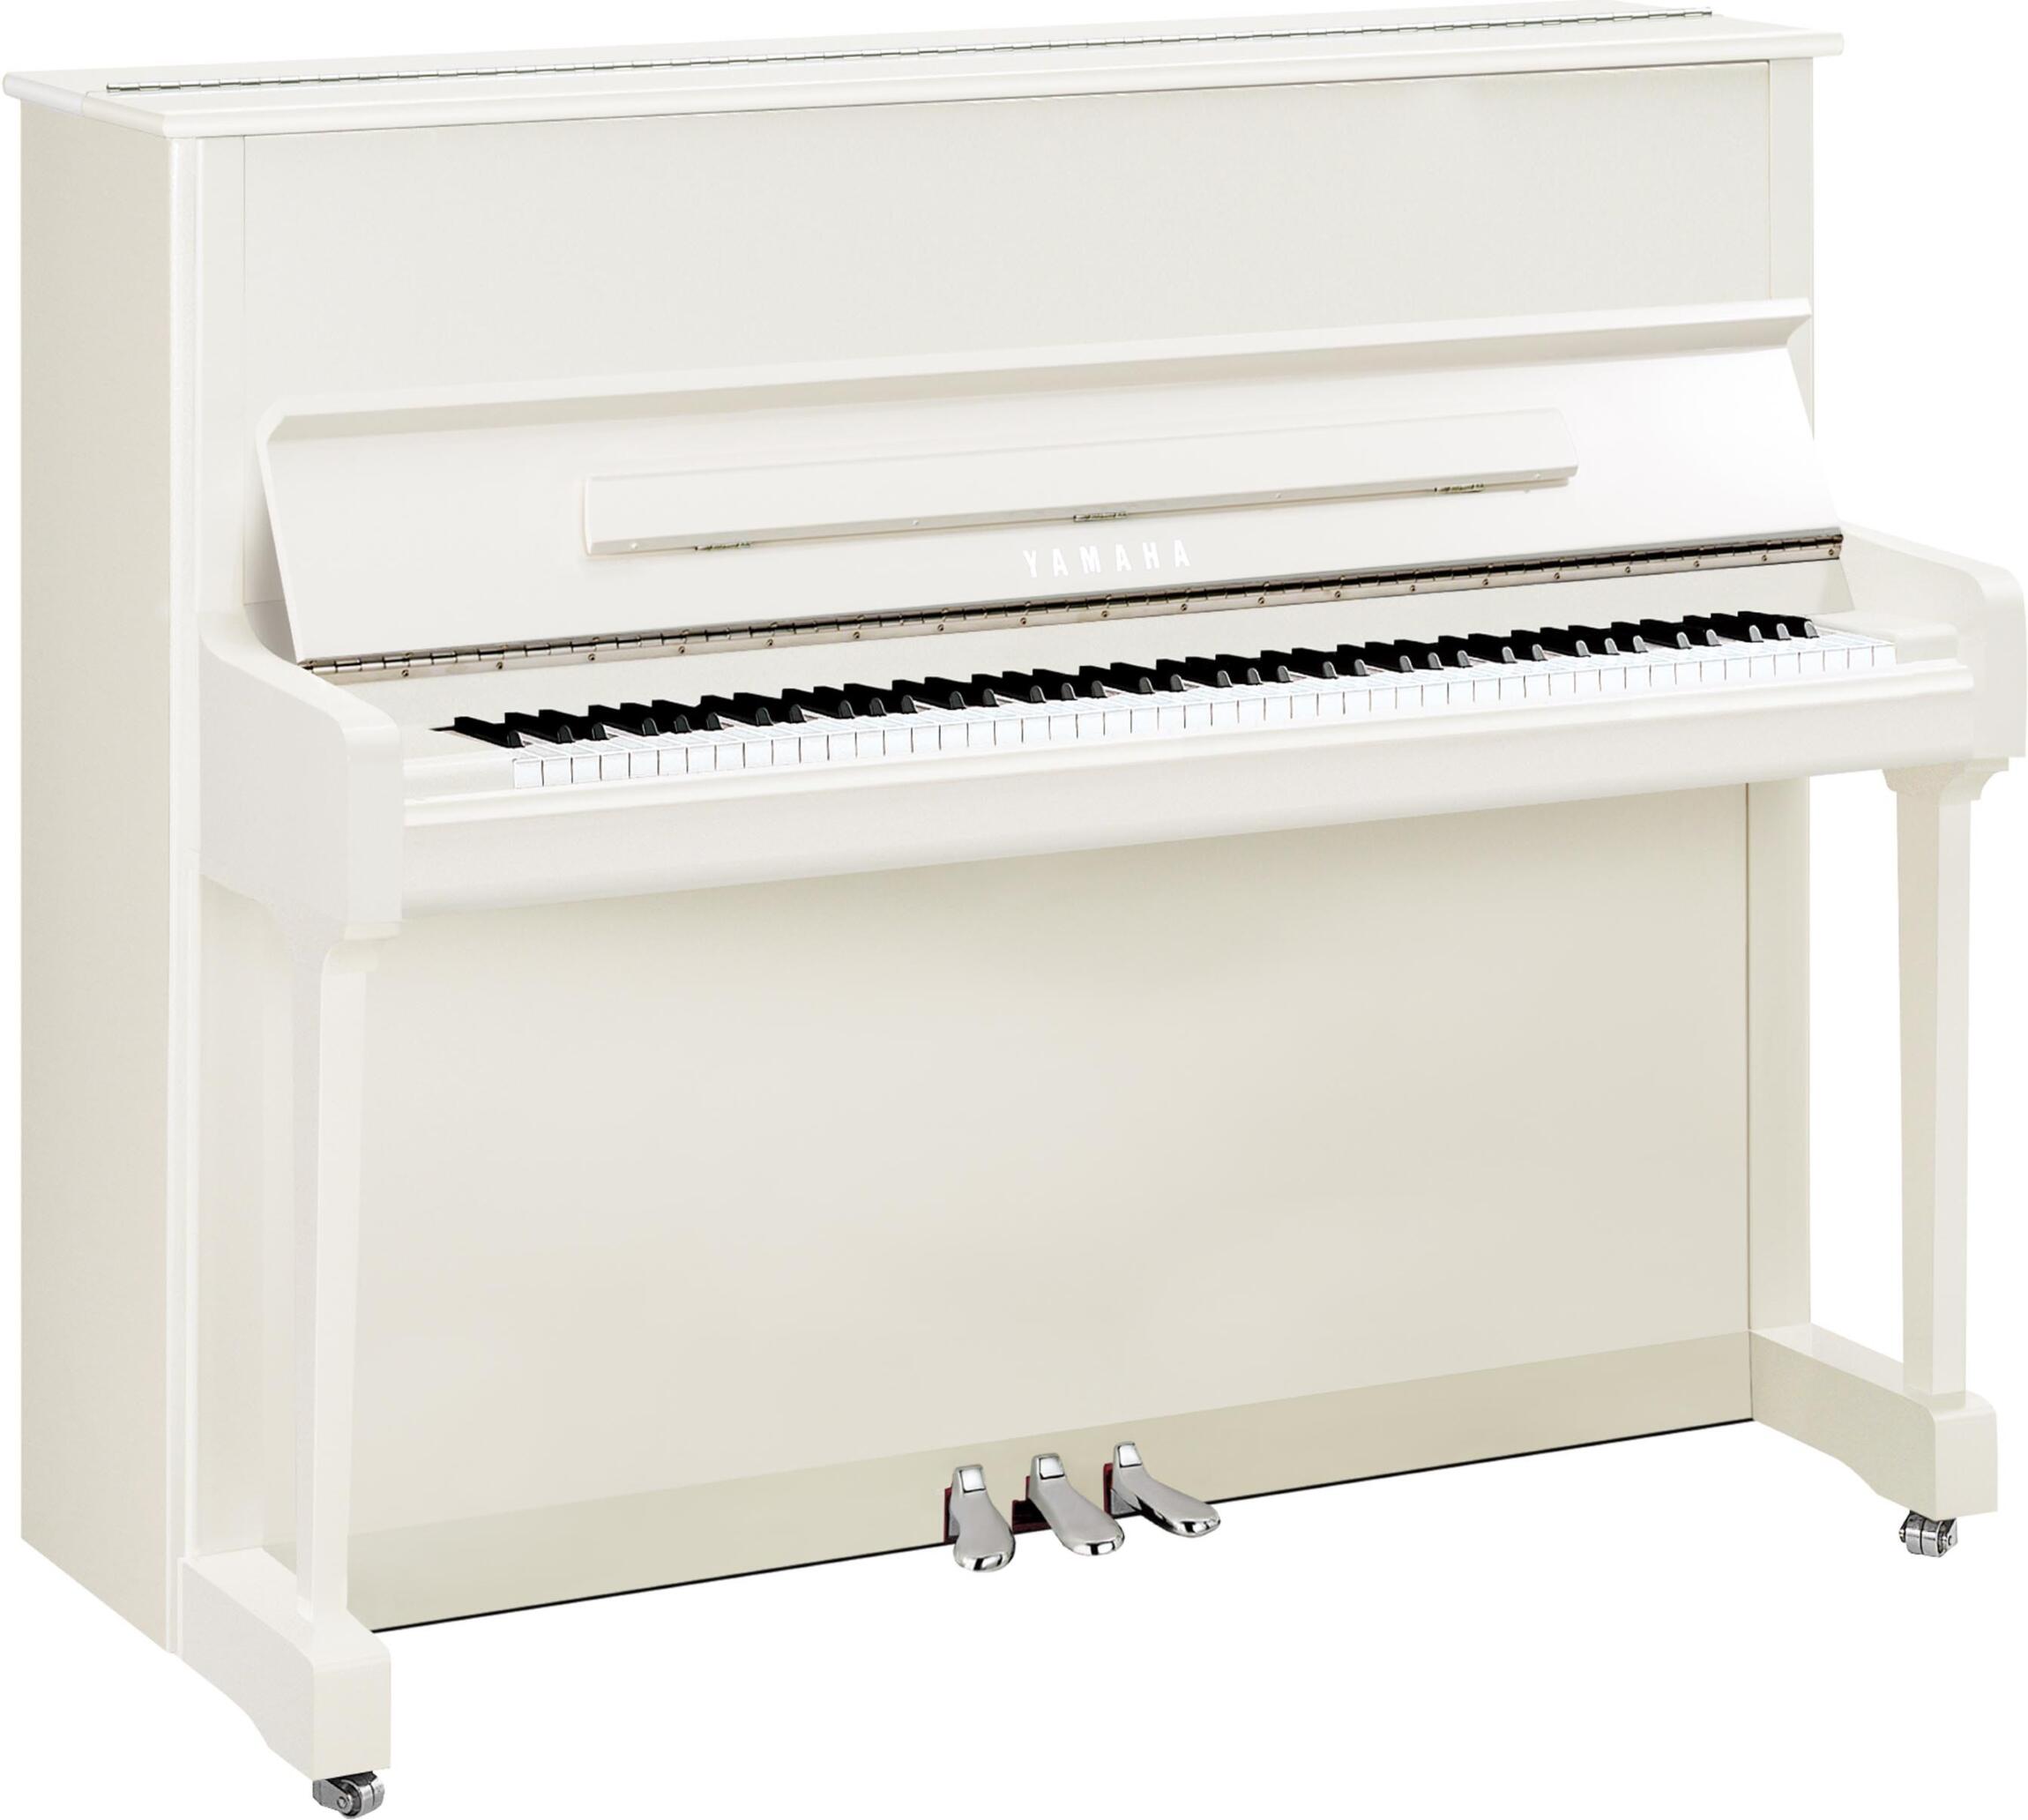 Yamaha Pianos Acoustic P121 PWHC Blanc poli-brillant Chrome 121 cm : photo 1